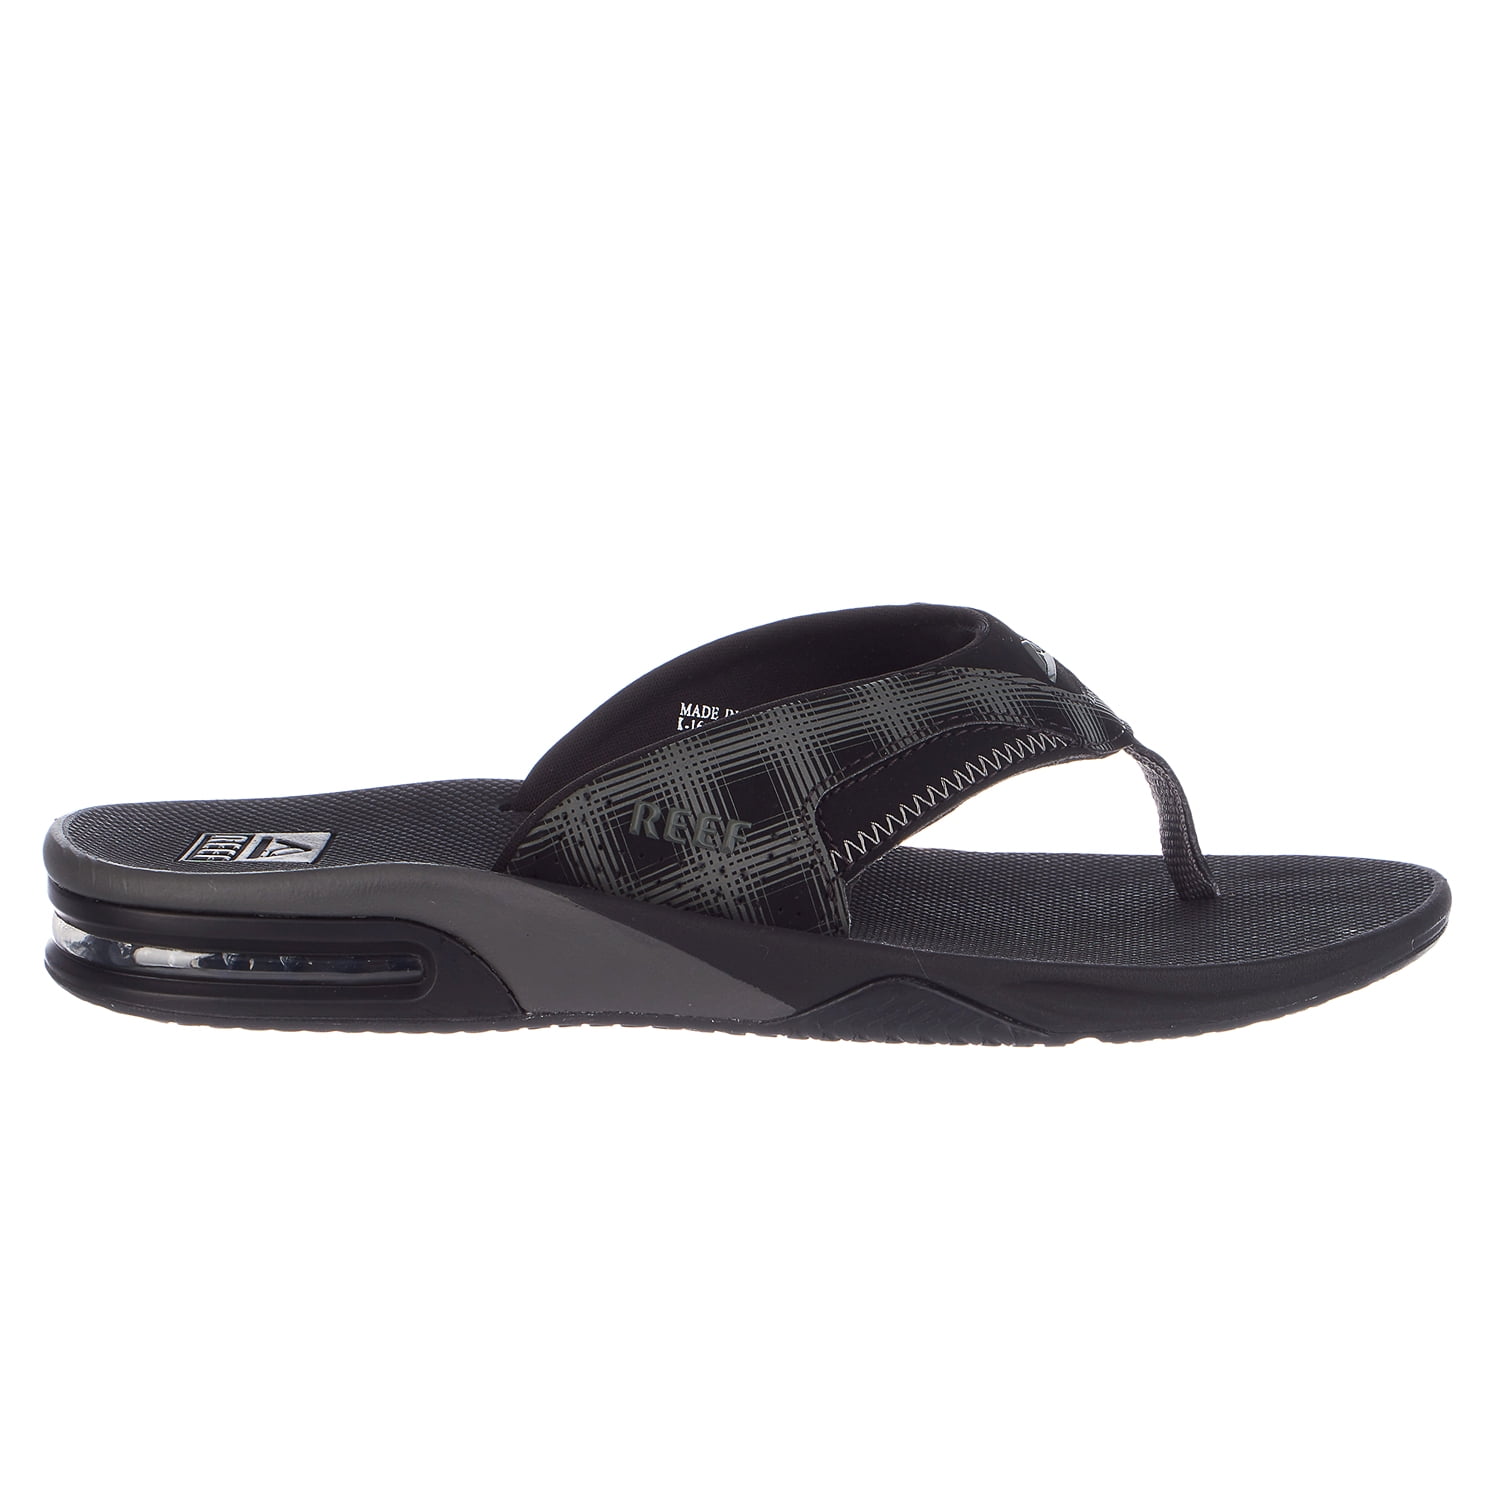 Men Reef HT Flip Flop Sandal RF002176 Black Synthetic 100% Original Brand New 